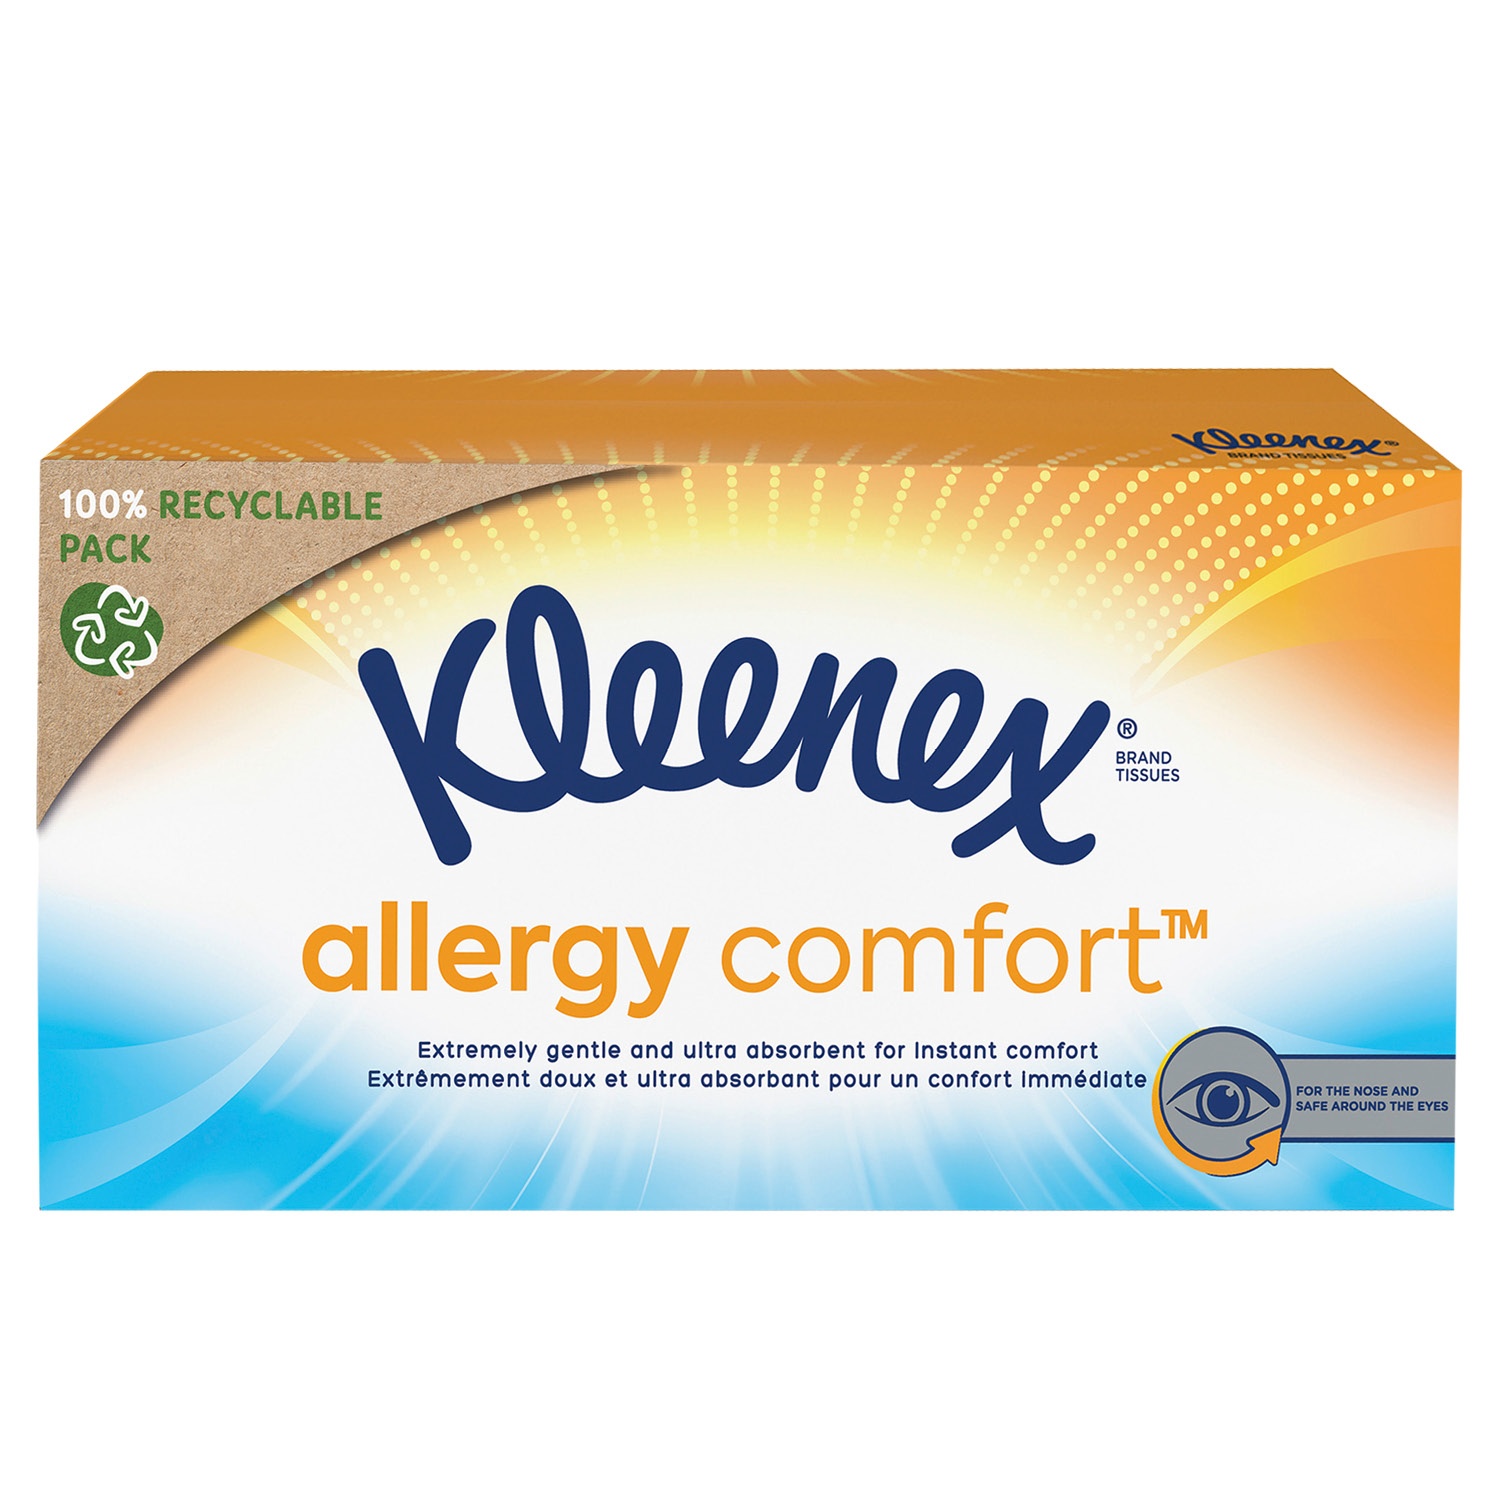 Kleenex® allergy comfort™ Box